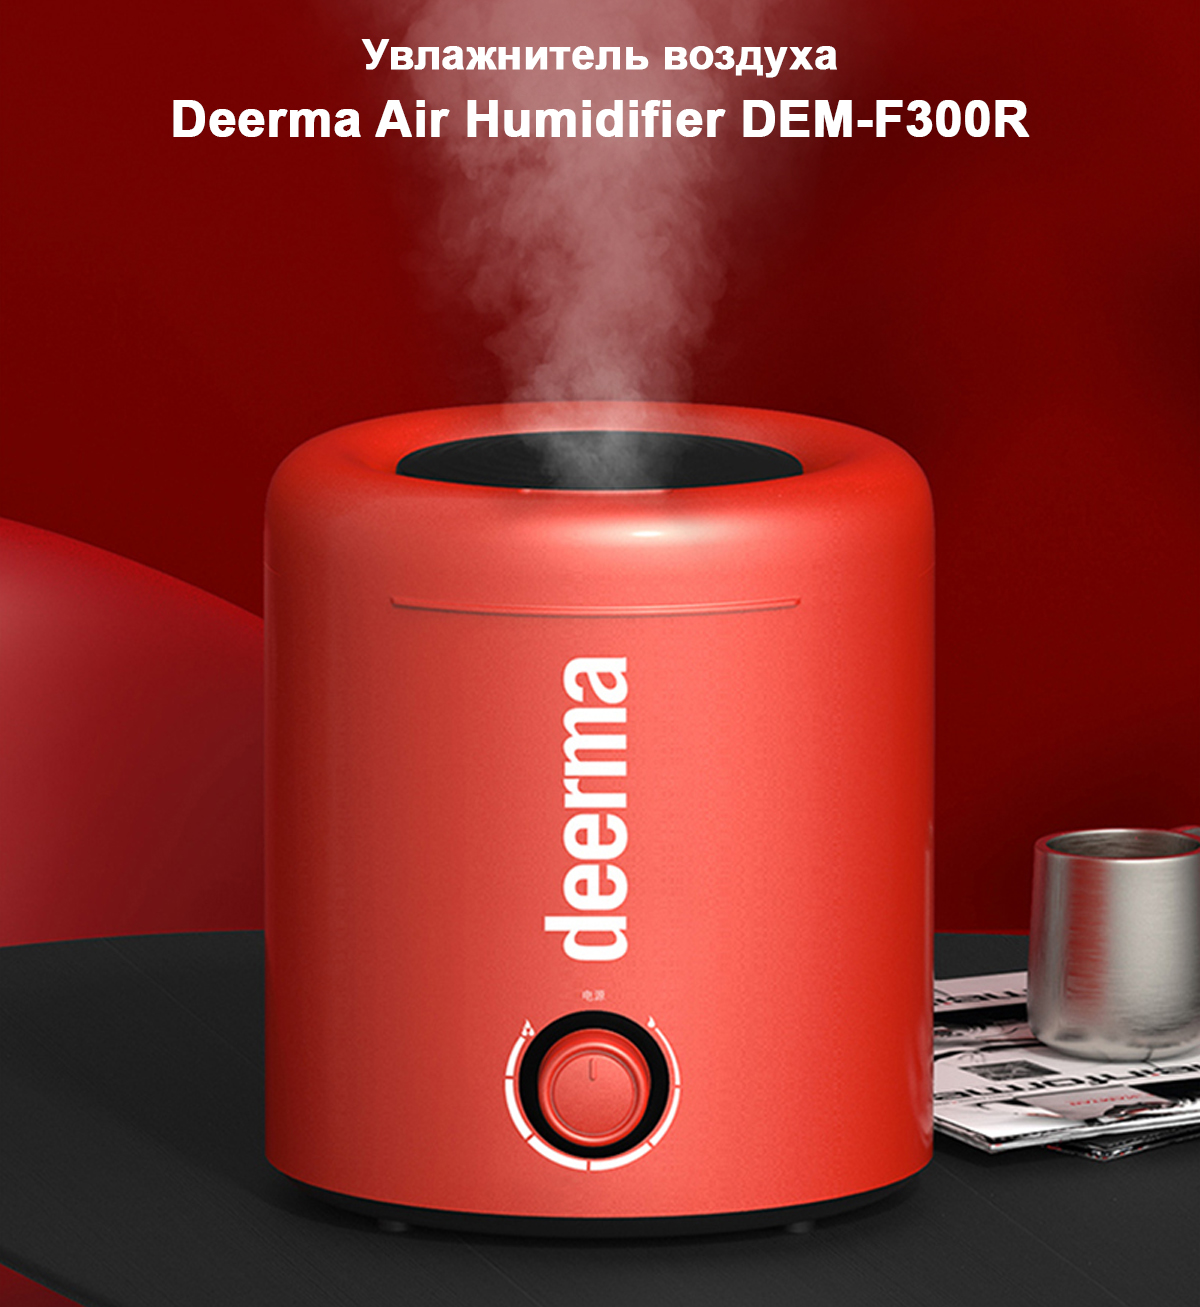 Увлажнитель воздуха Deerma Air Humidifier DEM-F300R